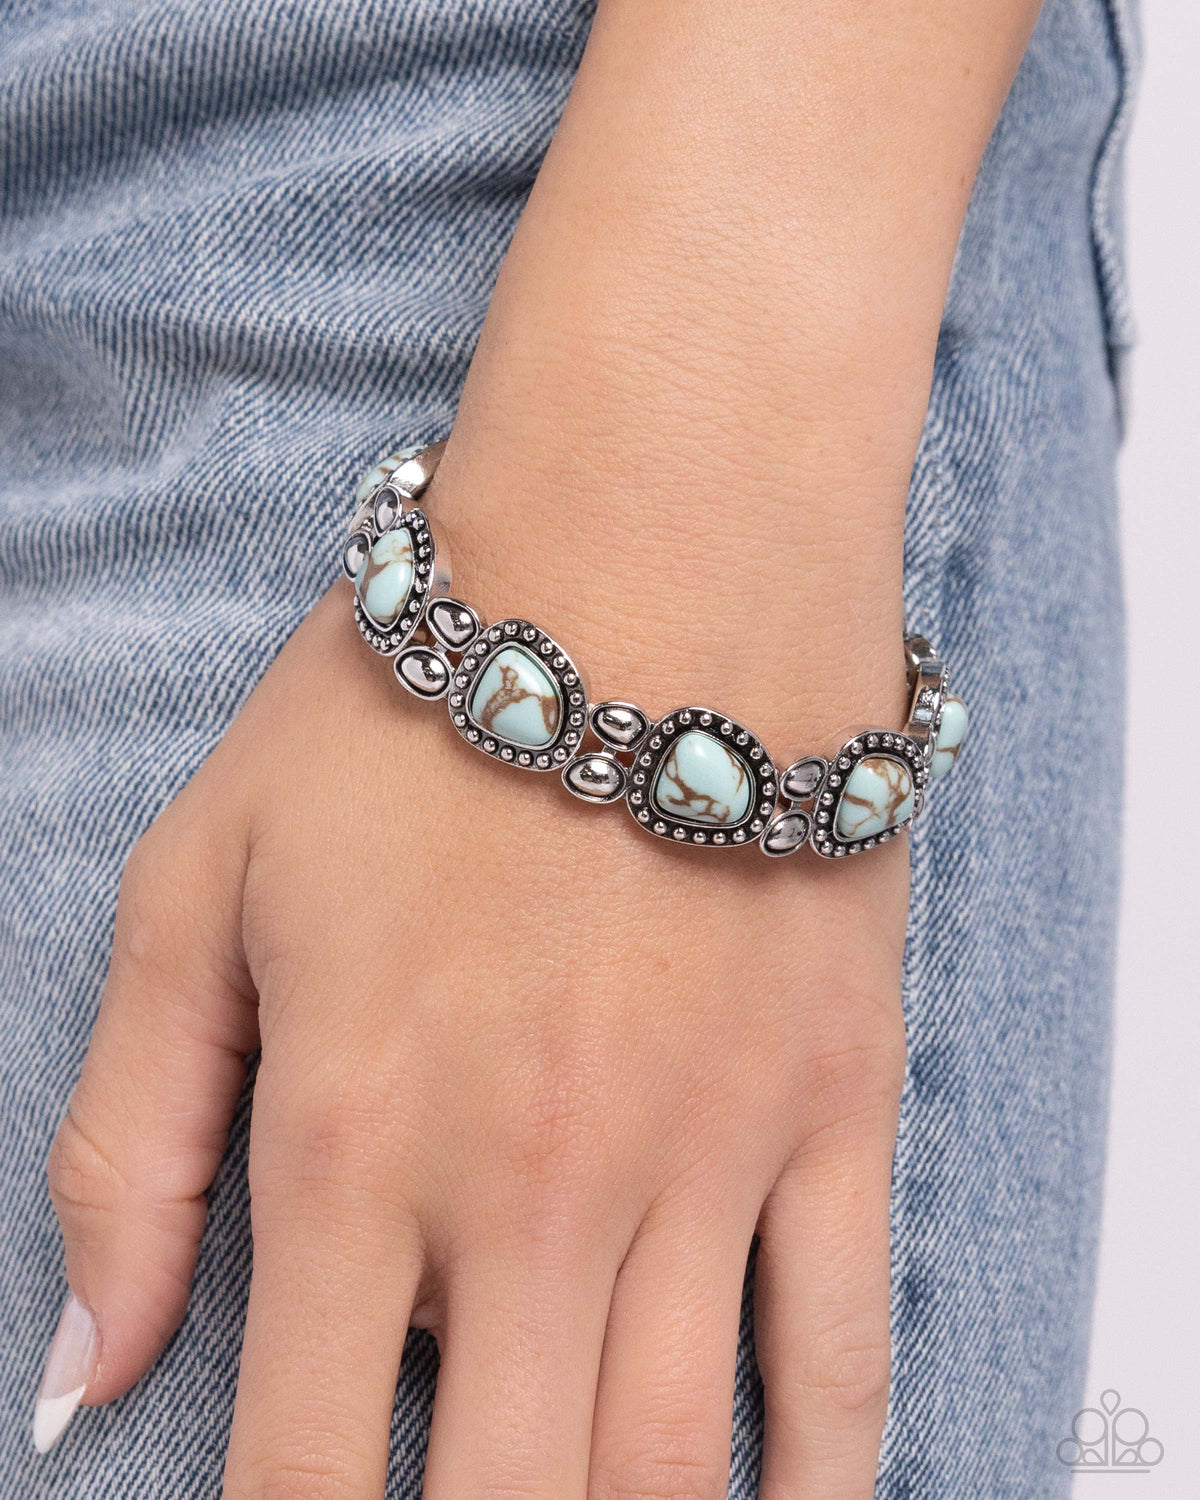 Harmonious Headliner Blue Stone Bracelet - Paparazzi Accessories-on model - CarasShop.com - $5 Jewelry by Cara Jewels